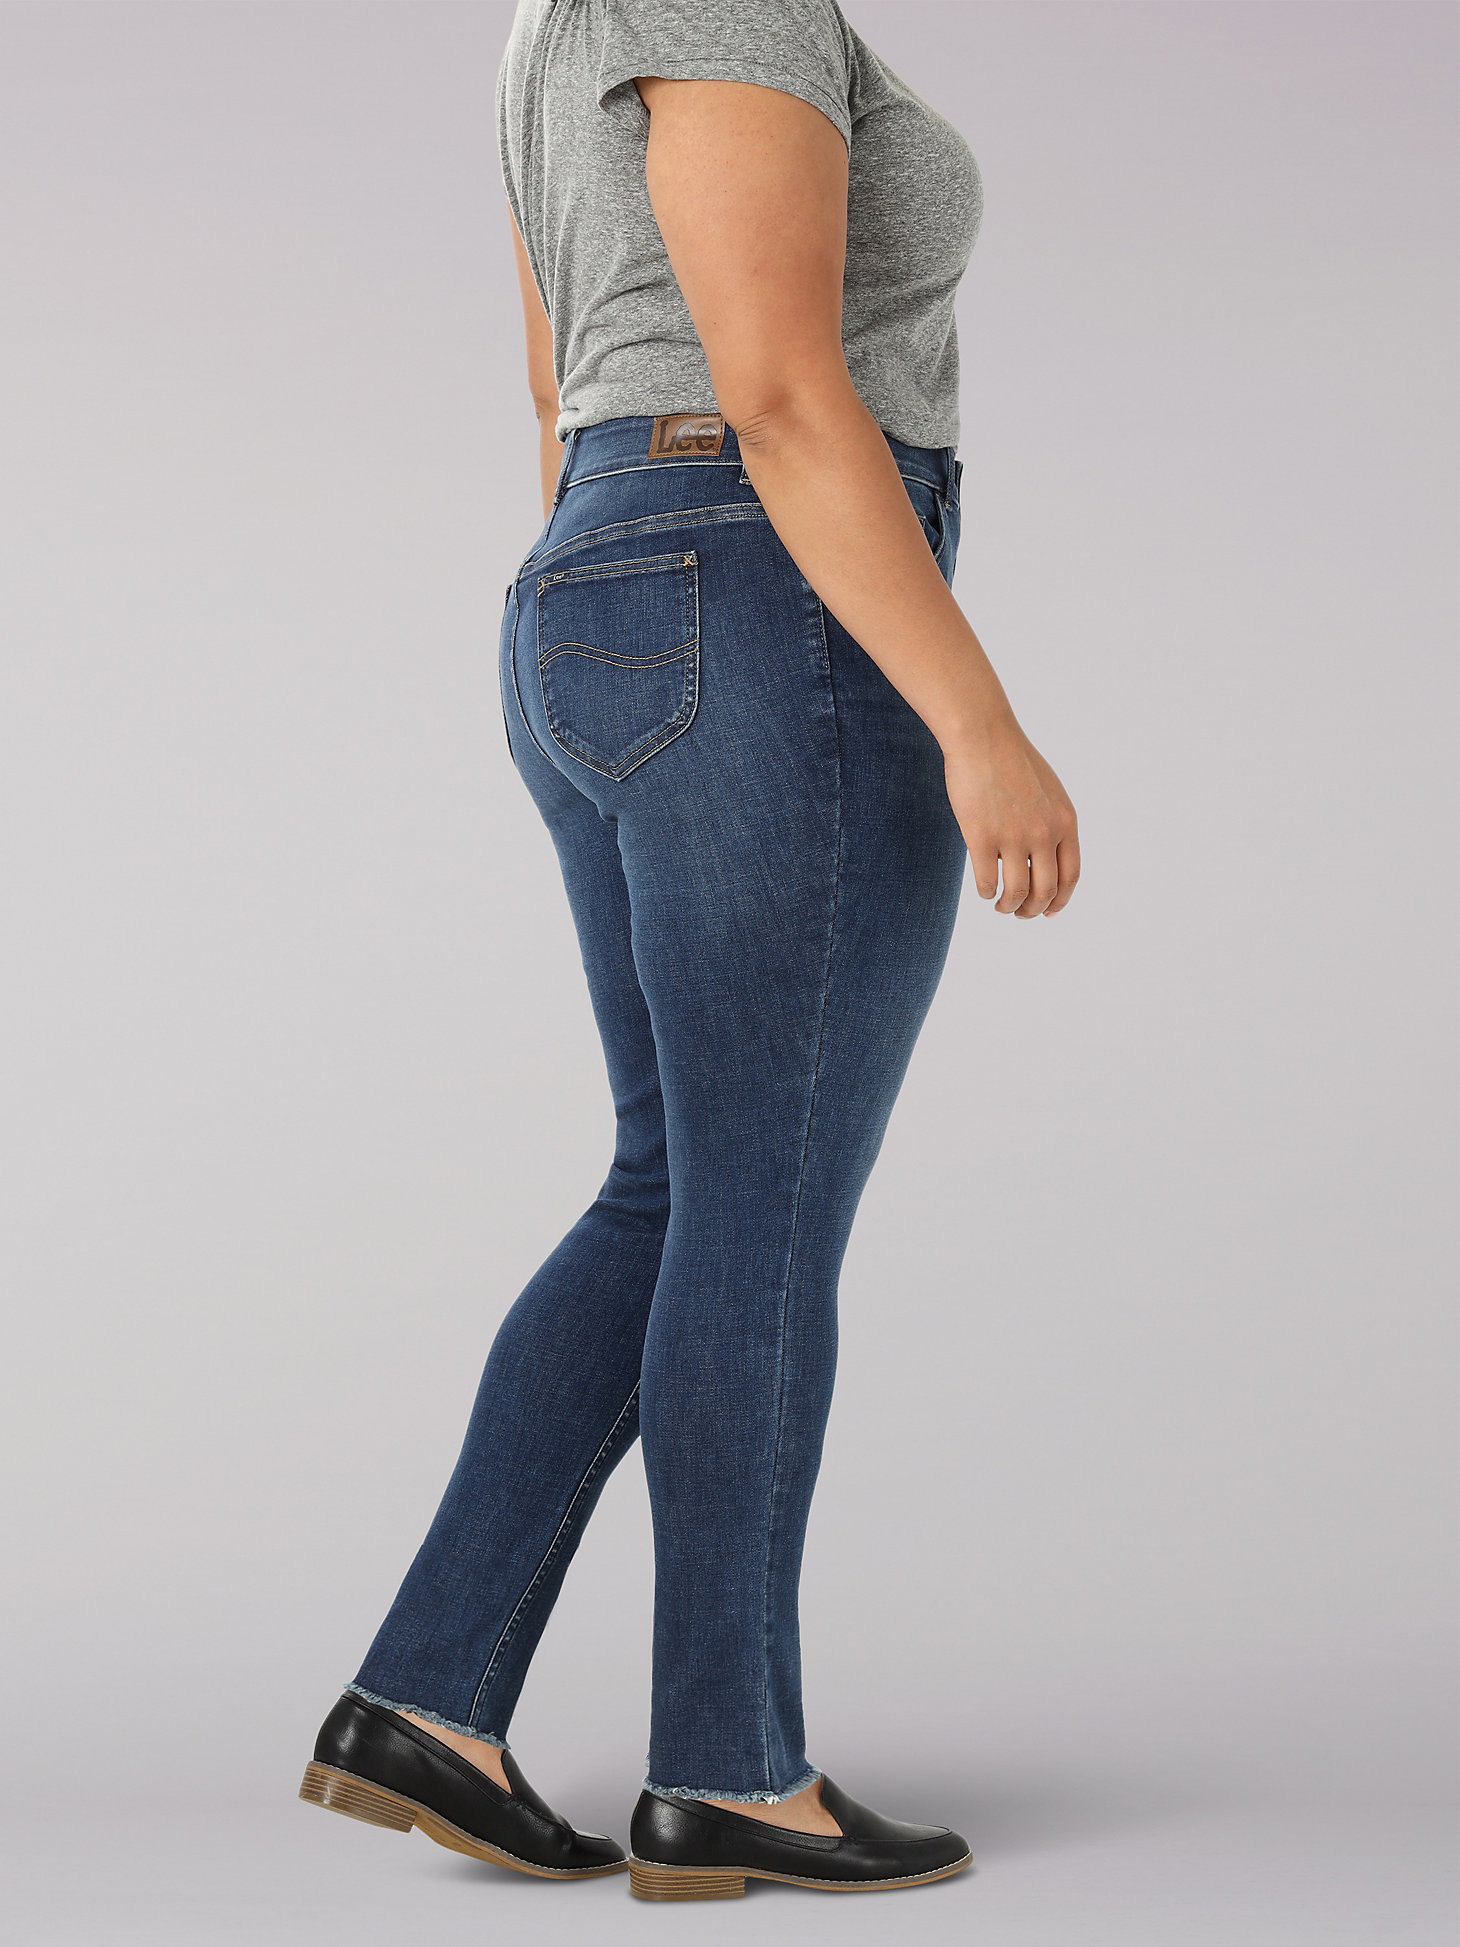 Women's High Rise Frayed Hem Skinny Ankle Jean (Plus) in Heather Indigo alternative view 2